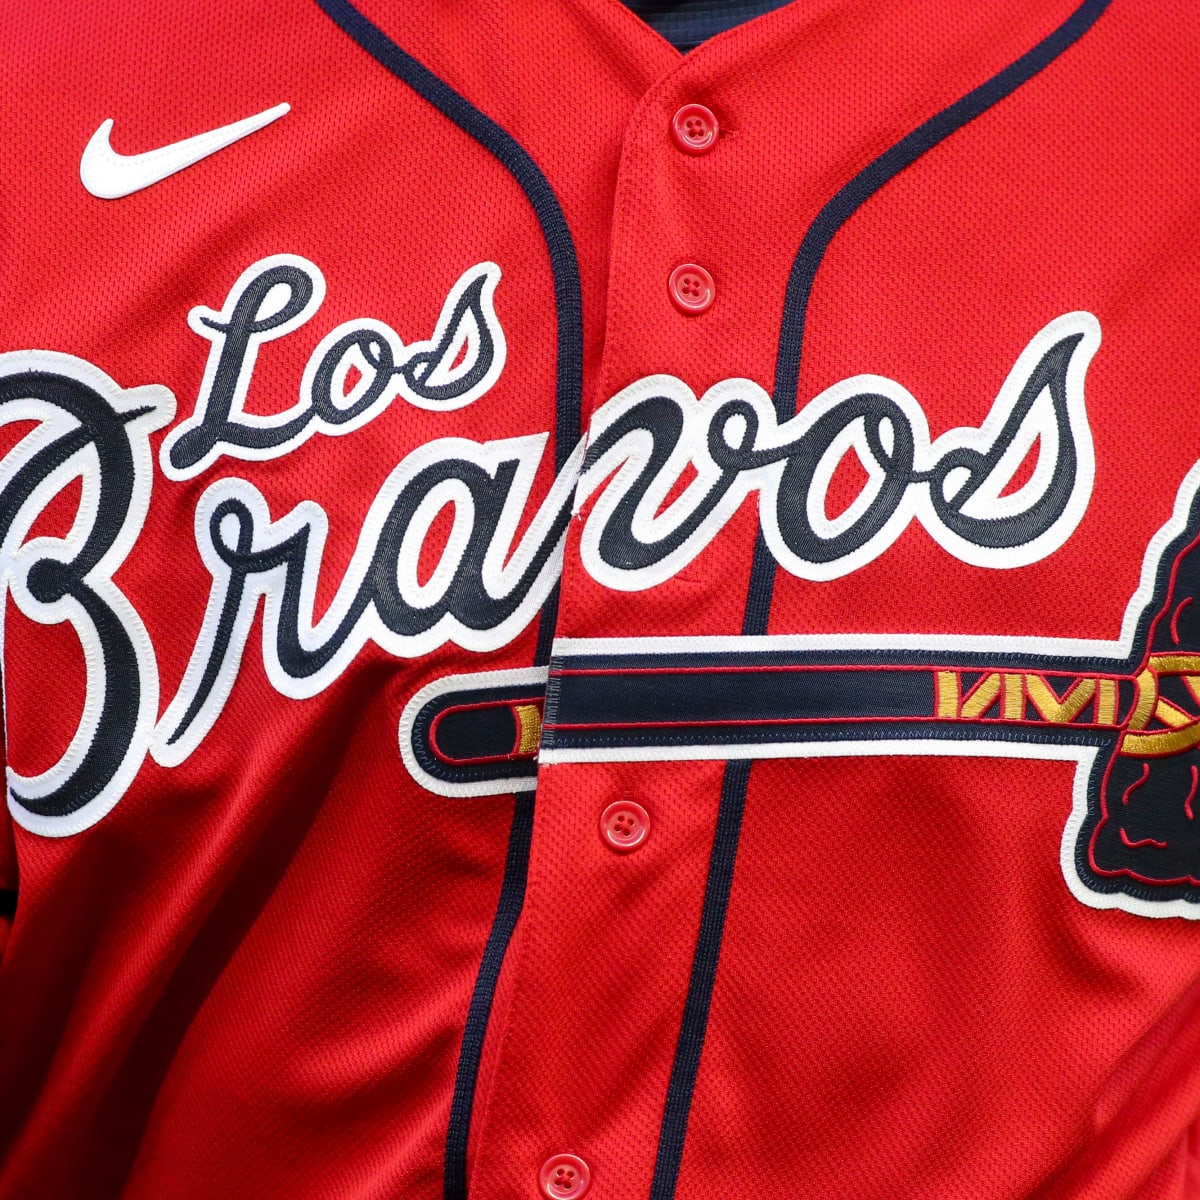 Los Bravos Atlanta Braves shirt